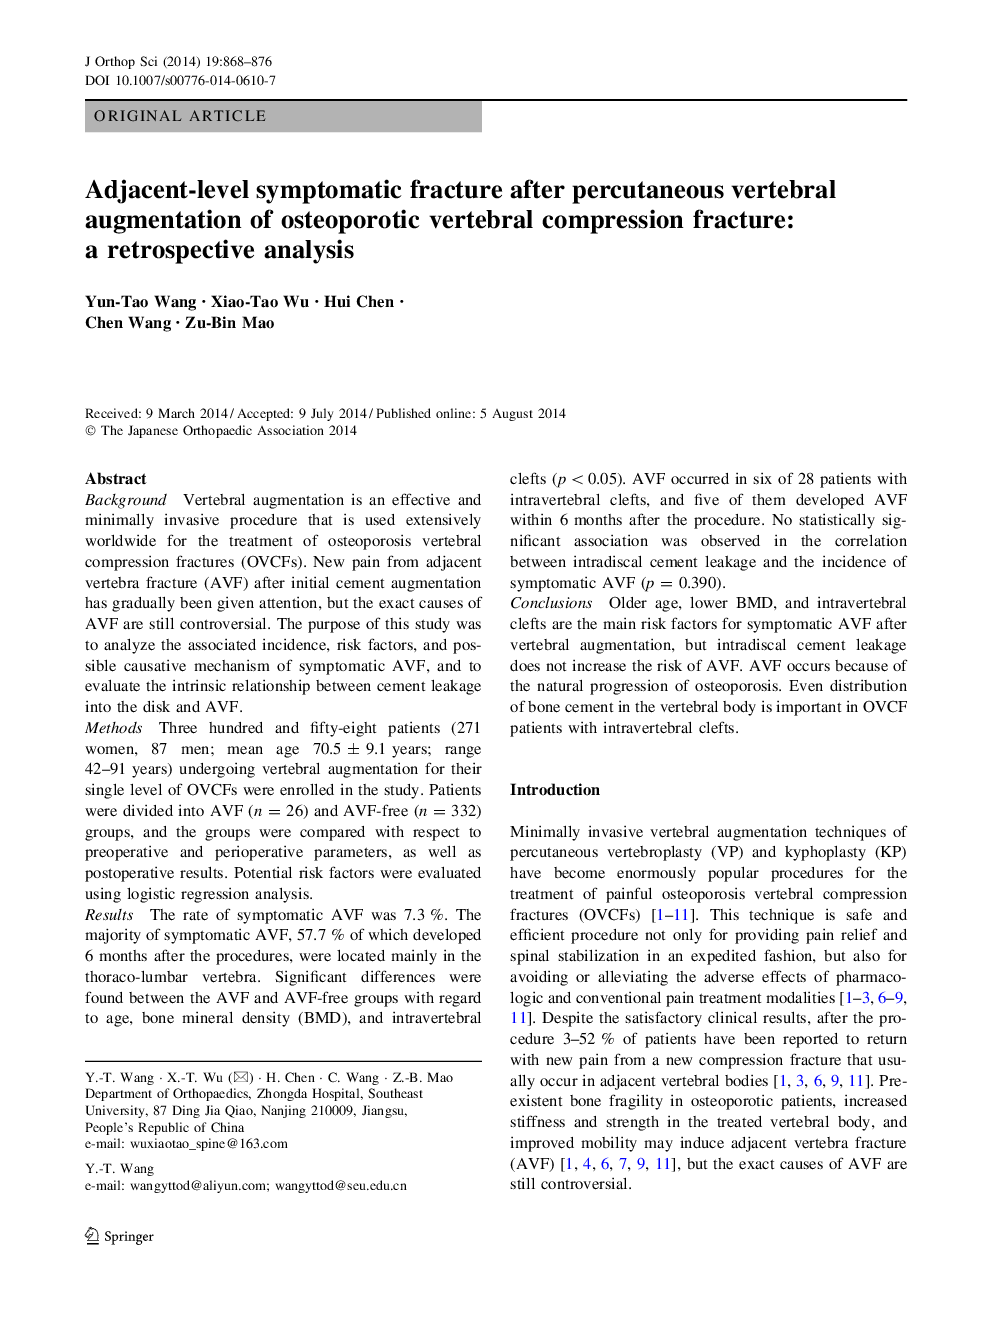 Adjacent-level symptomatic fracture after percutaneous vertebral augmentation of osteoporotic vertebral compression fracture: a retrospective analysis